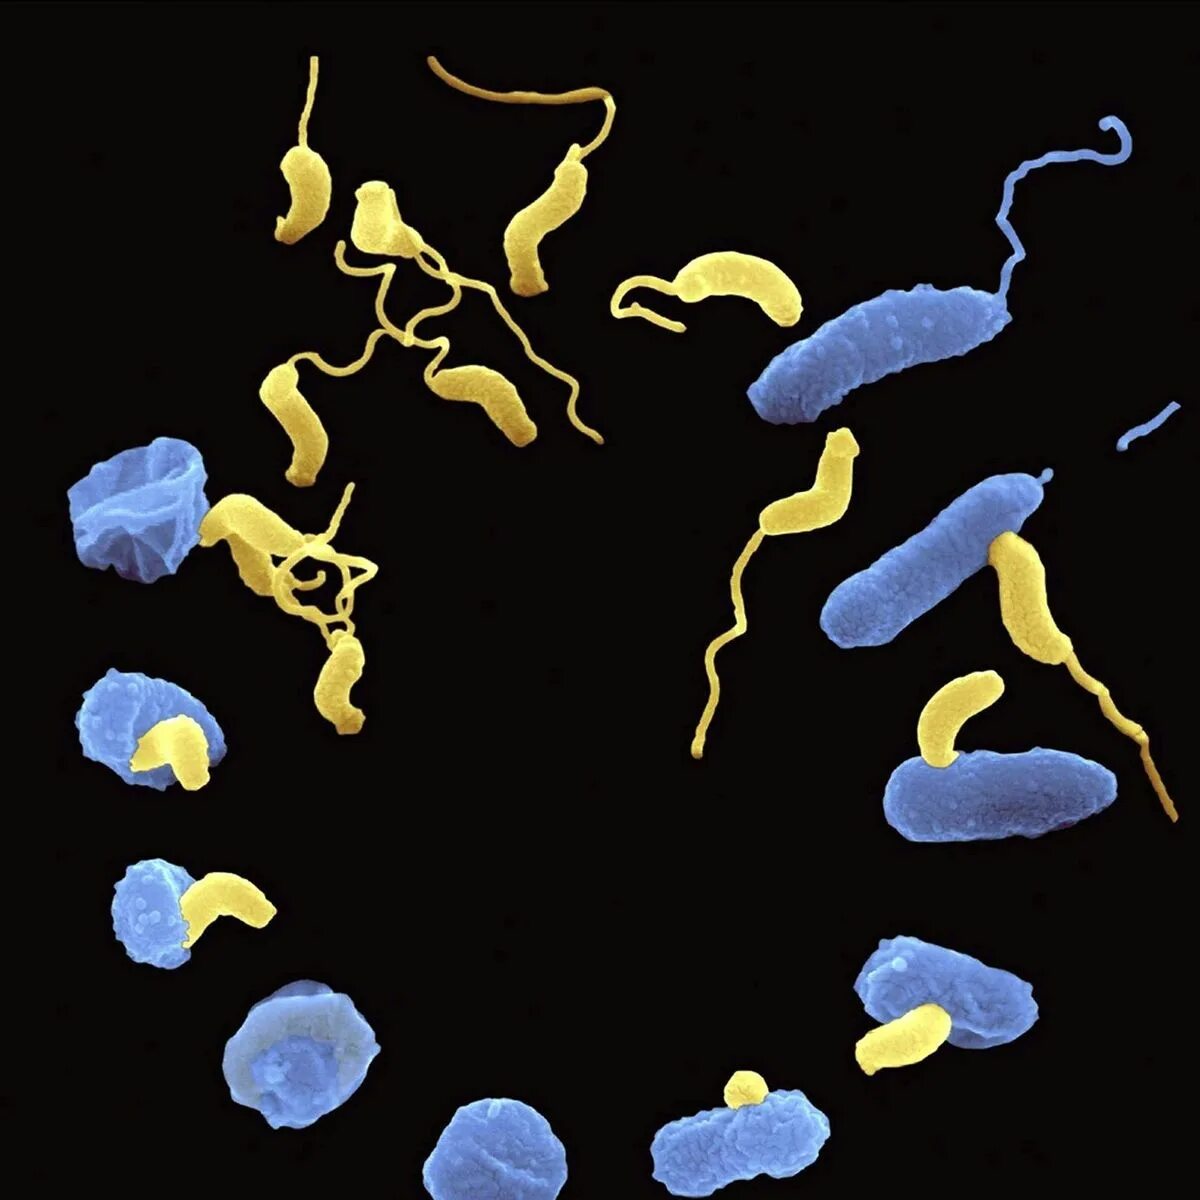 Bdellovibrio bacteriovorus. Bdellovibrio микробиология. Хищничество бактерий.